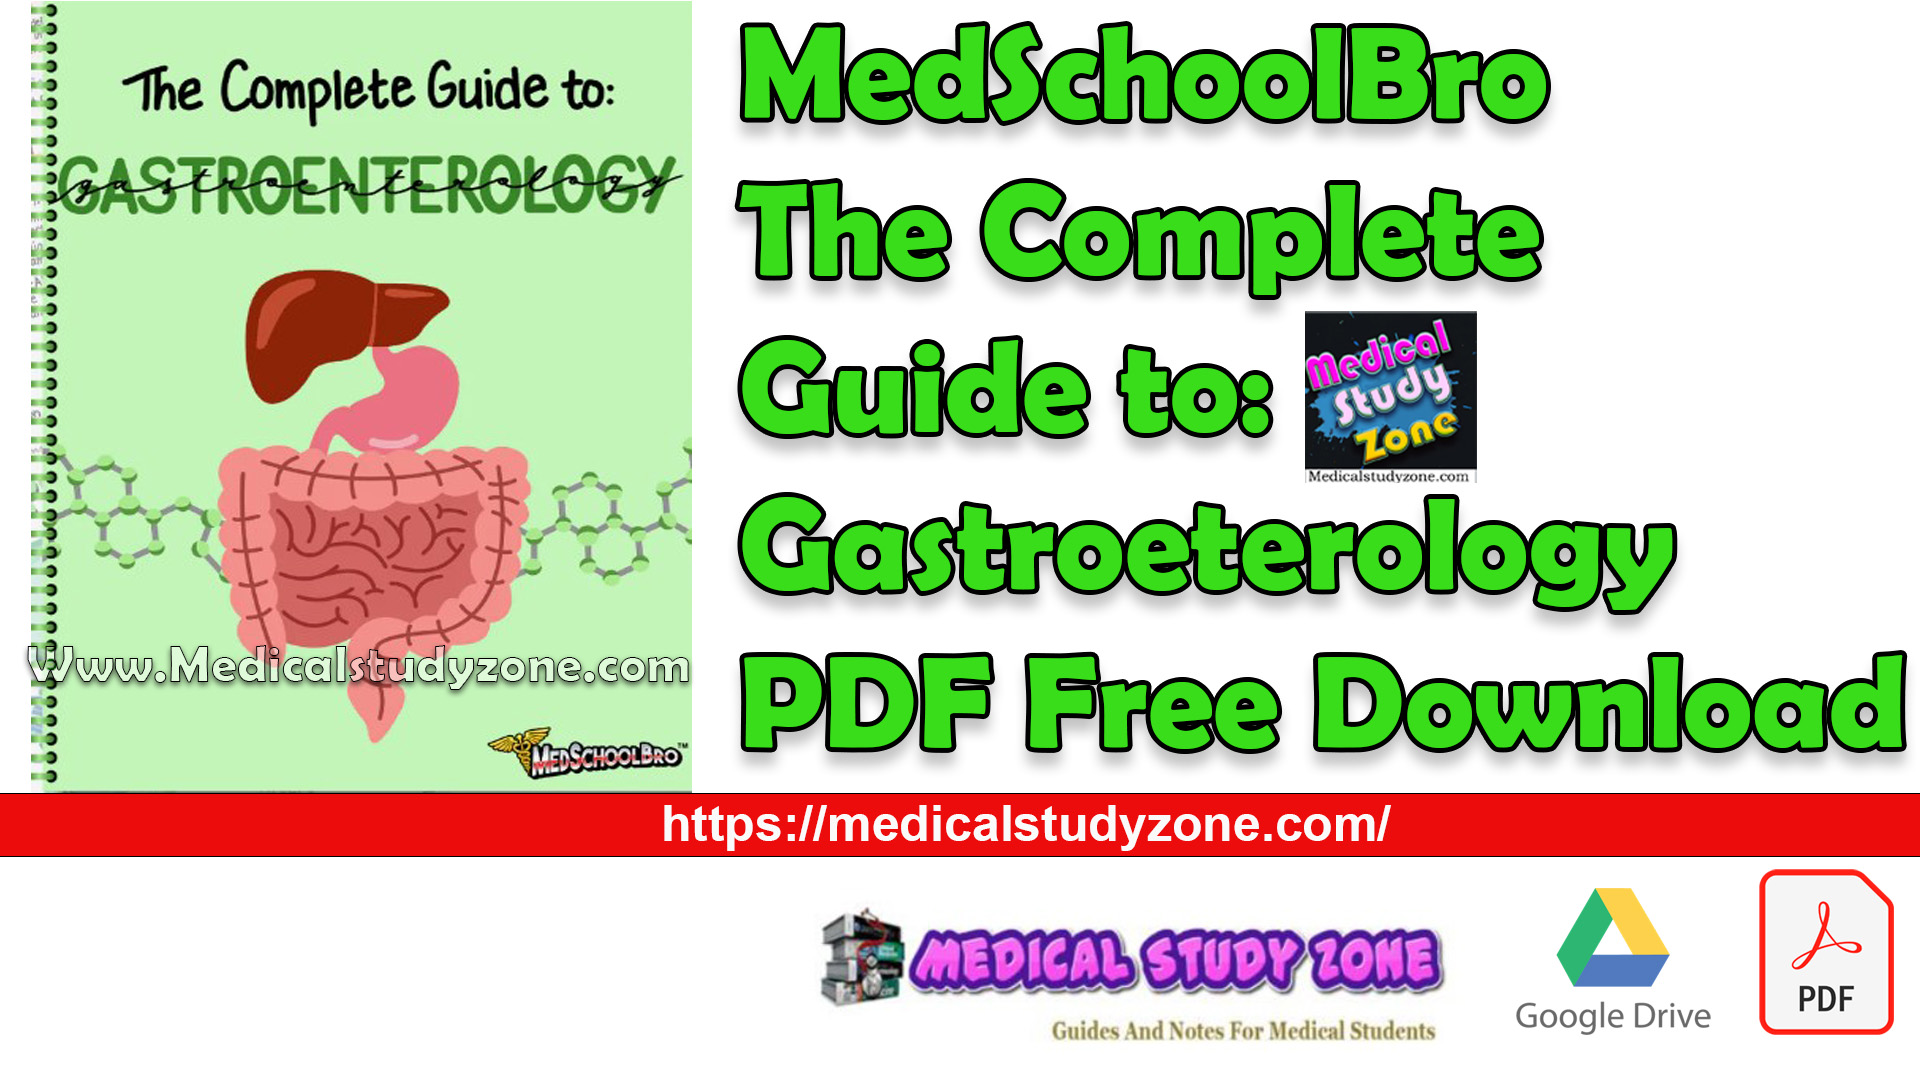 MedSchoolBro The Complete Guide to: Gastroenterology PDF Free Download